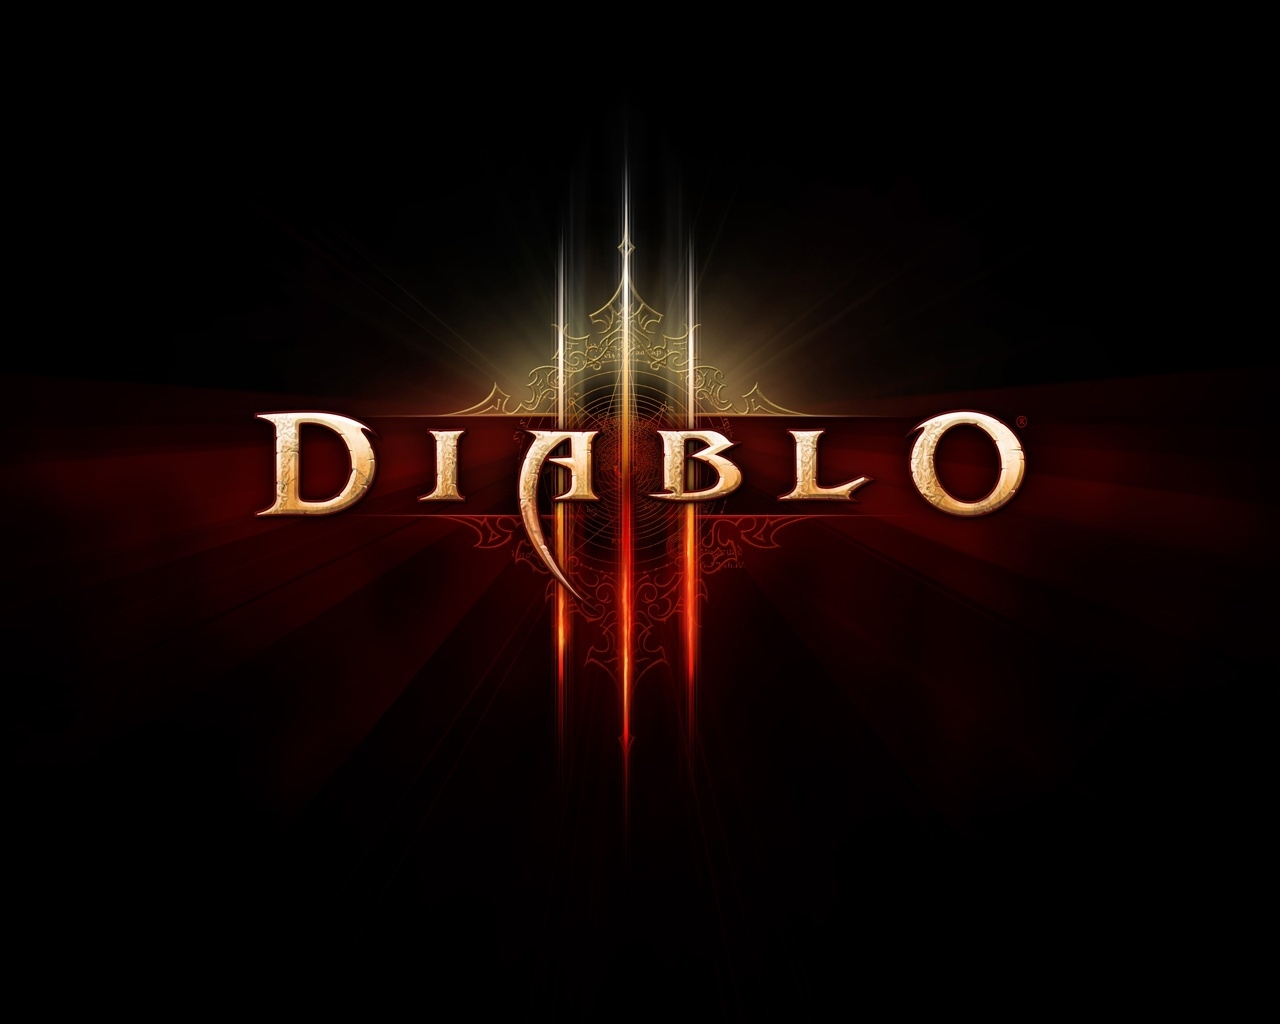 Diablo 3 Logo for 1280 x 1024 resolution